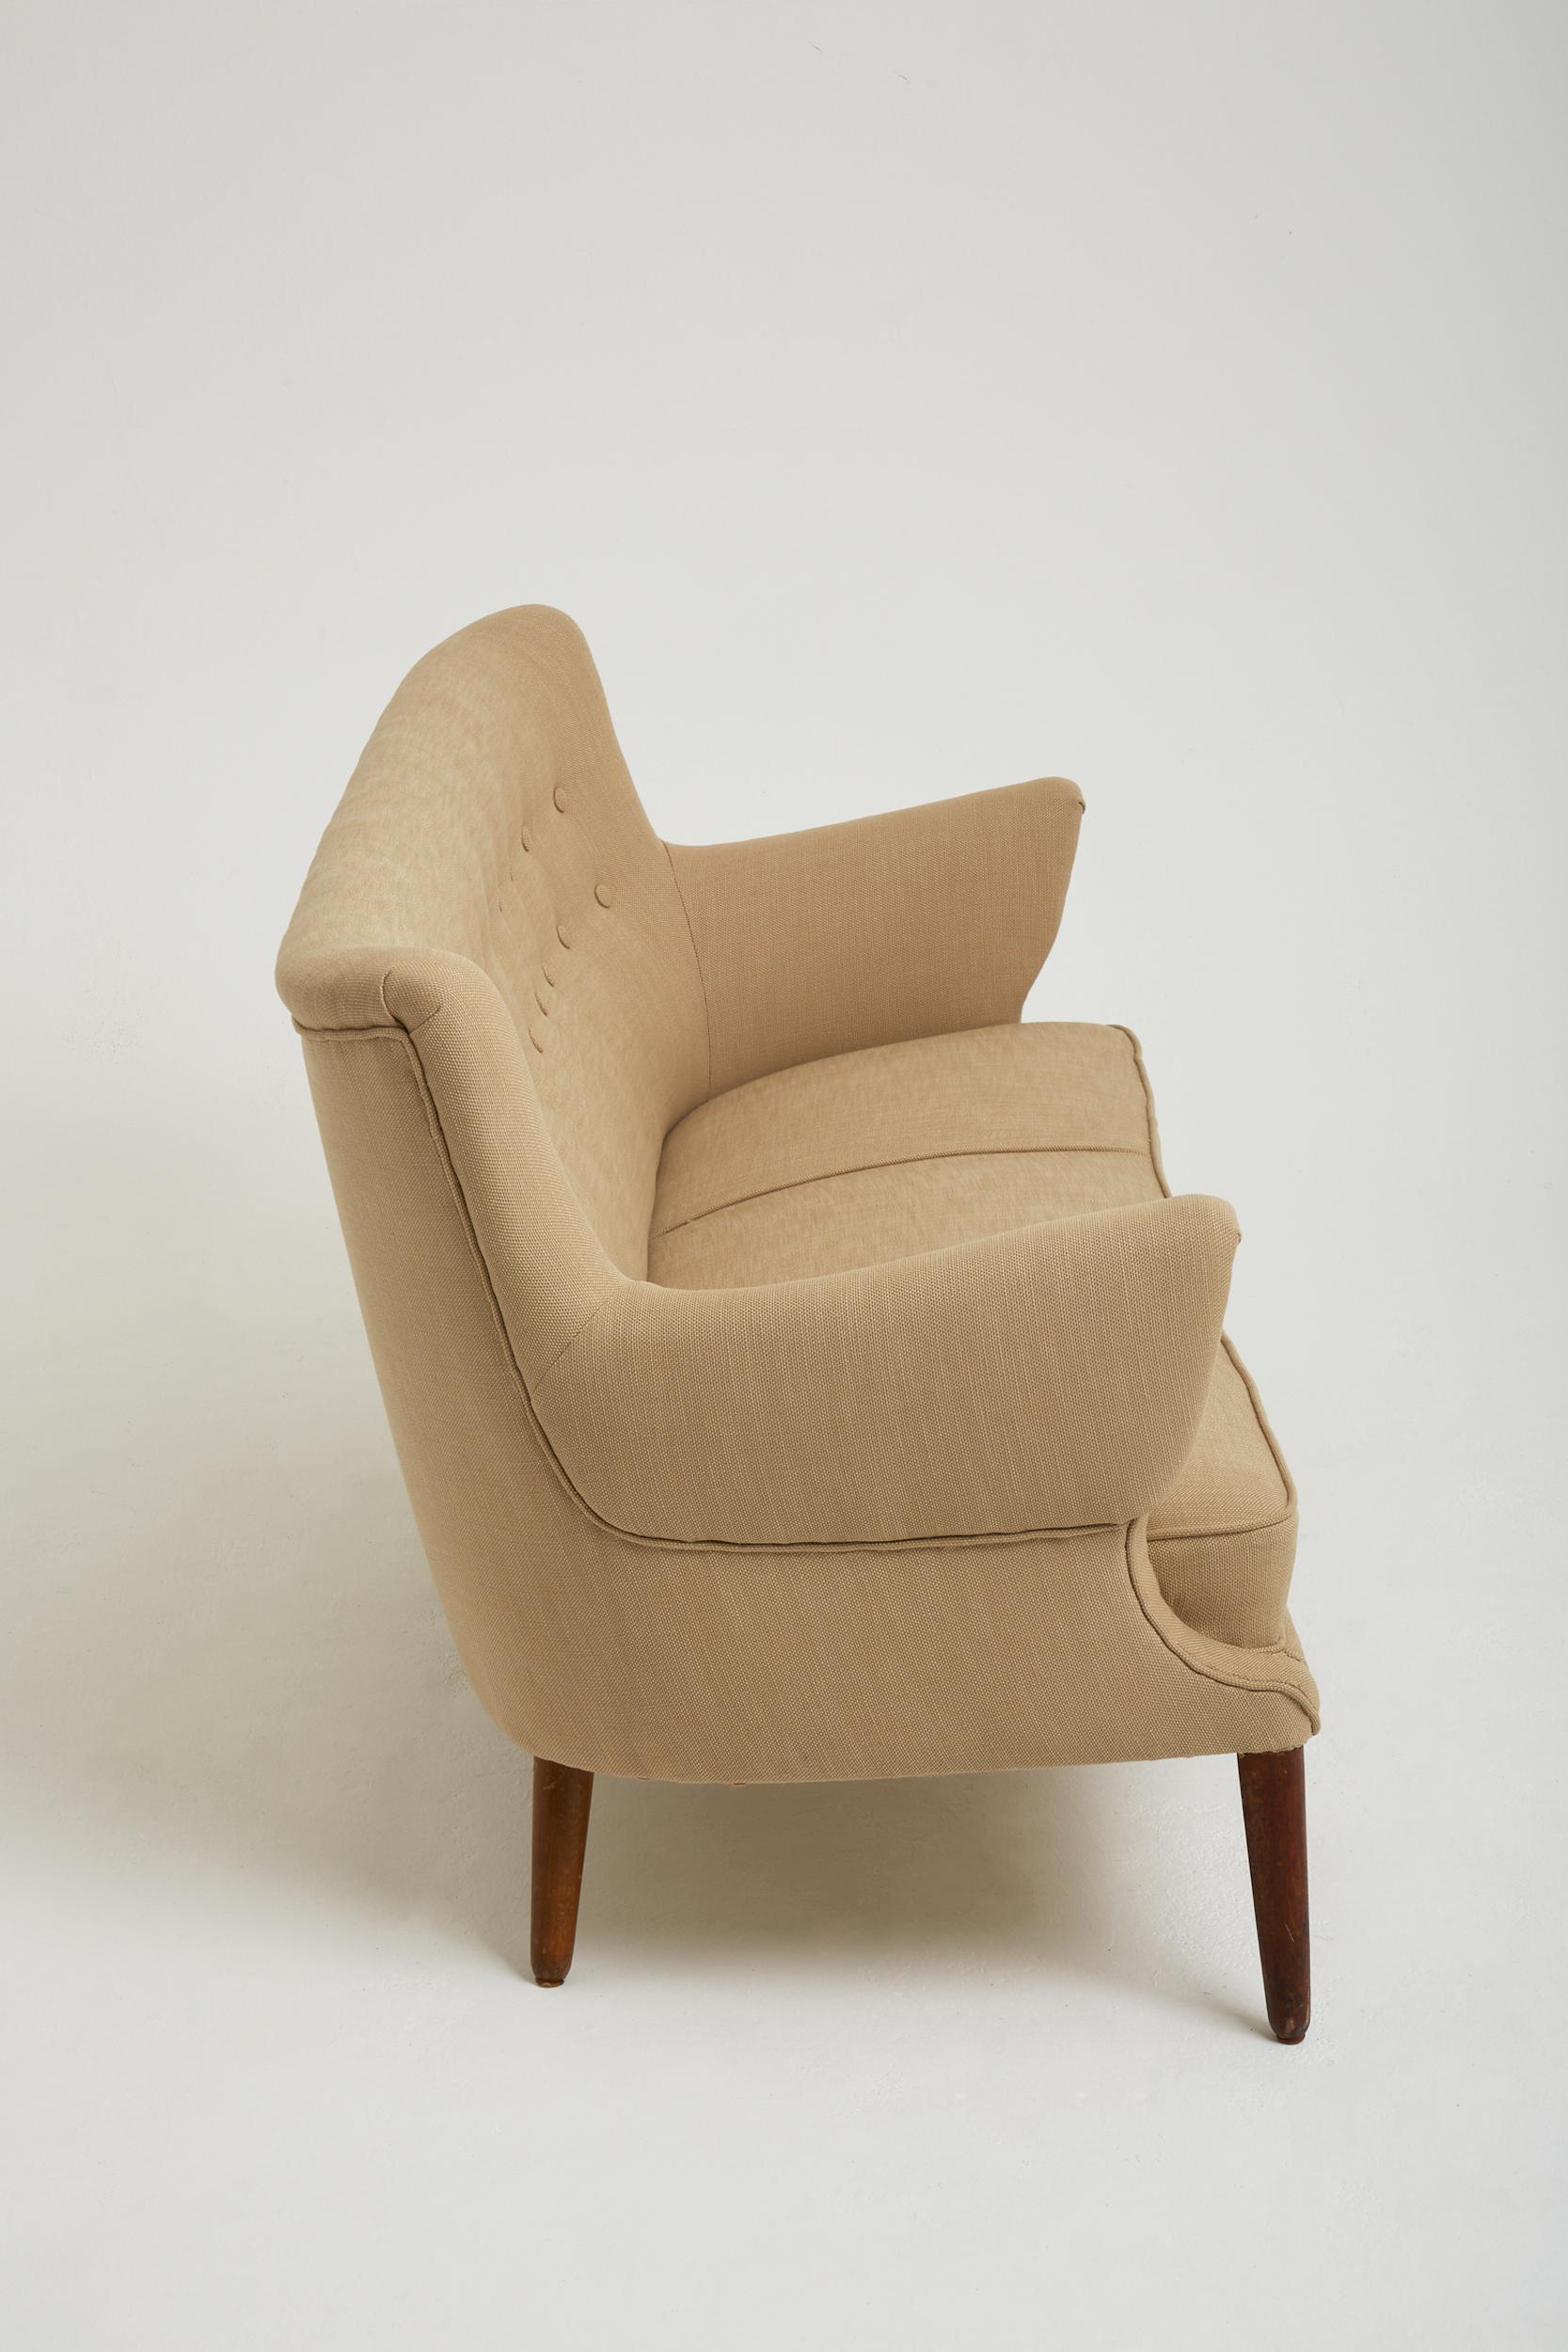 20th Century Swedish Modern Buttoned Sofa